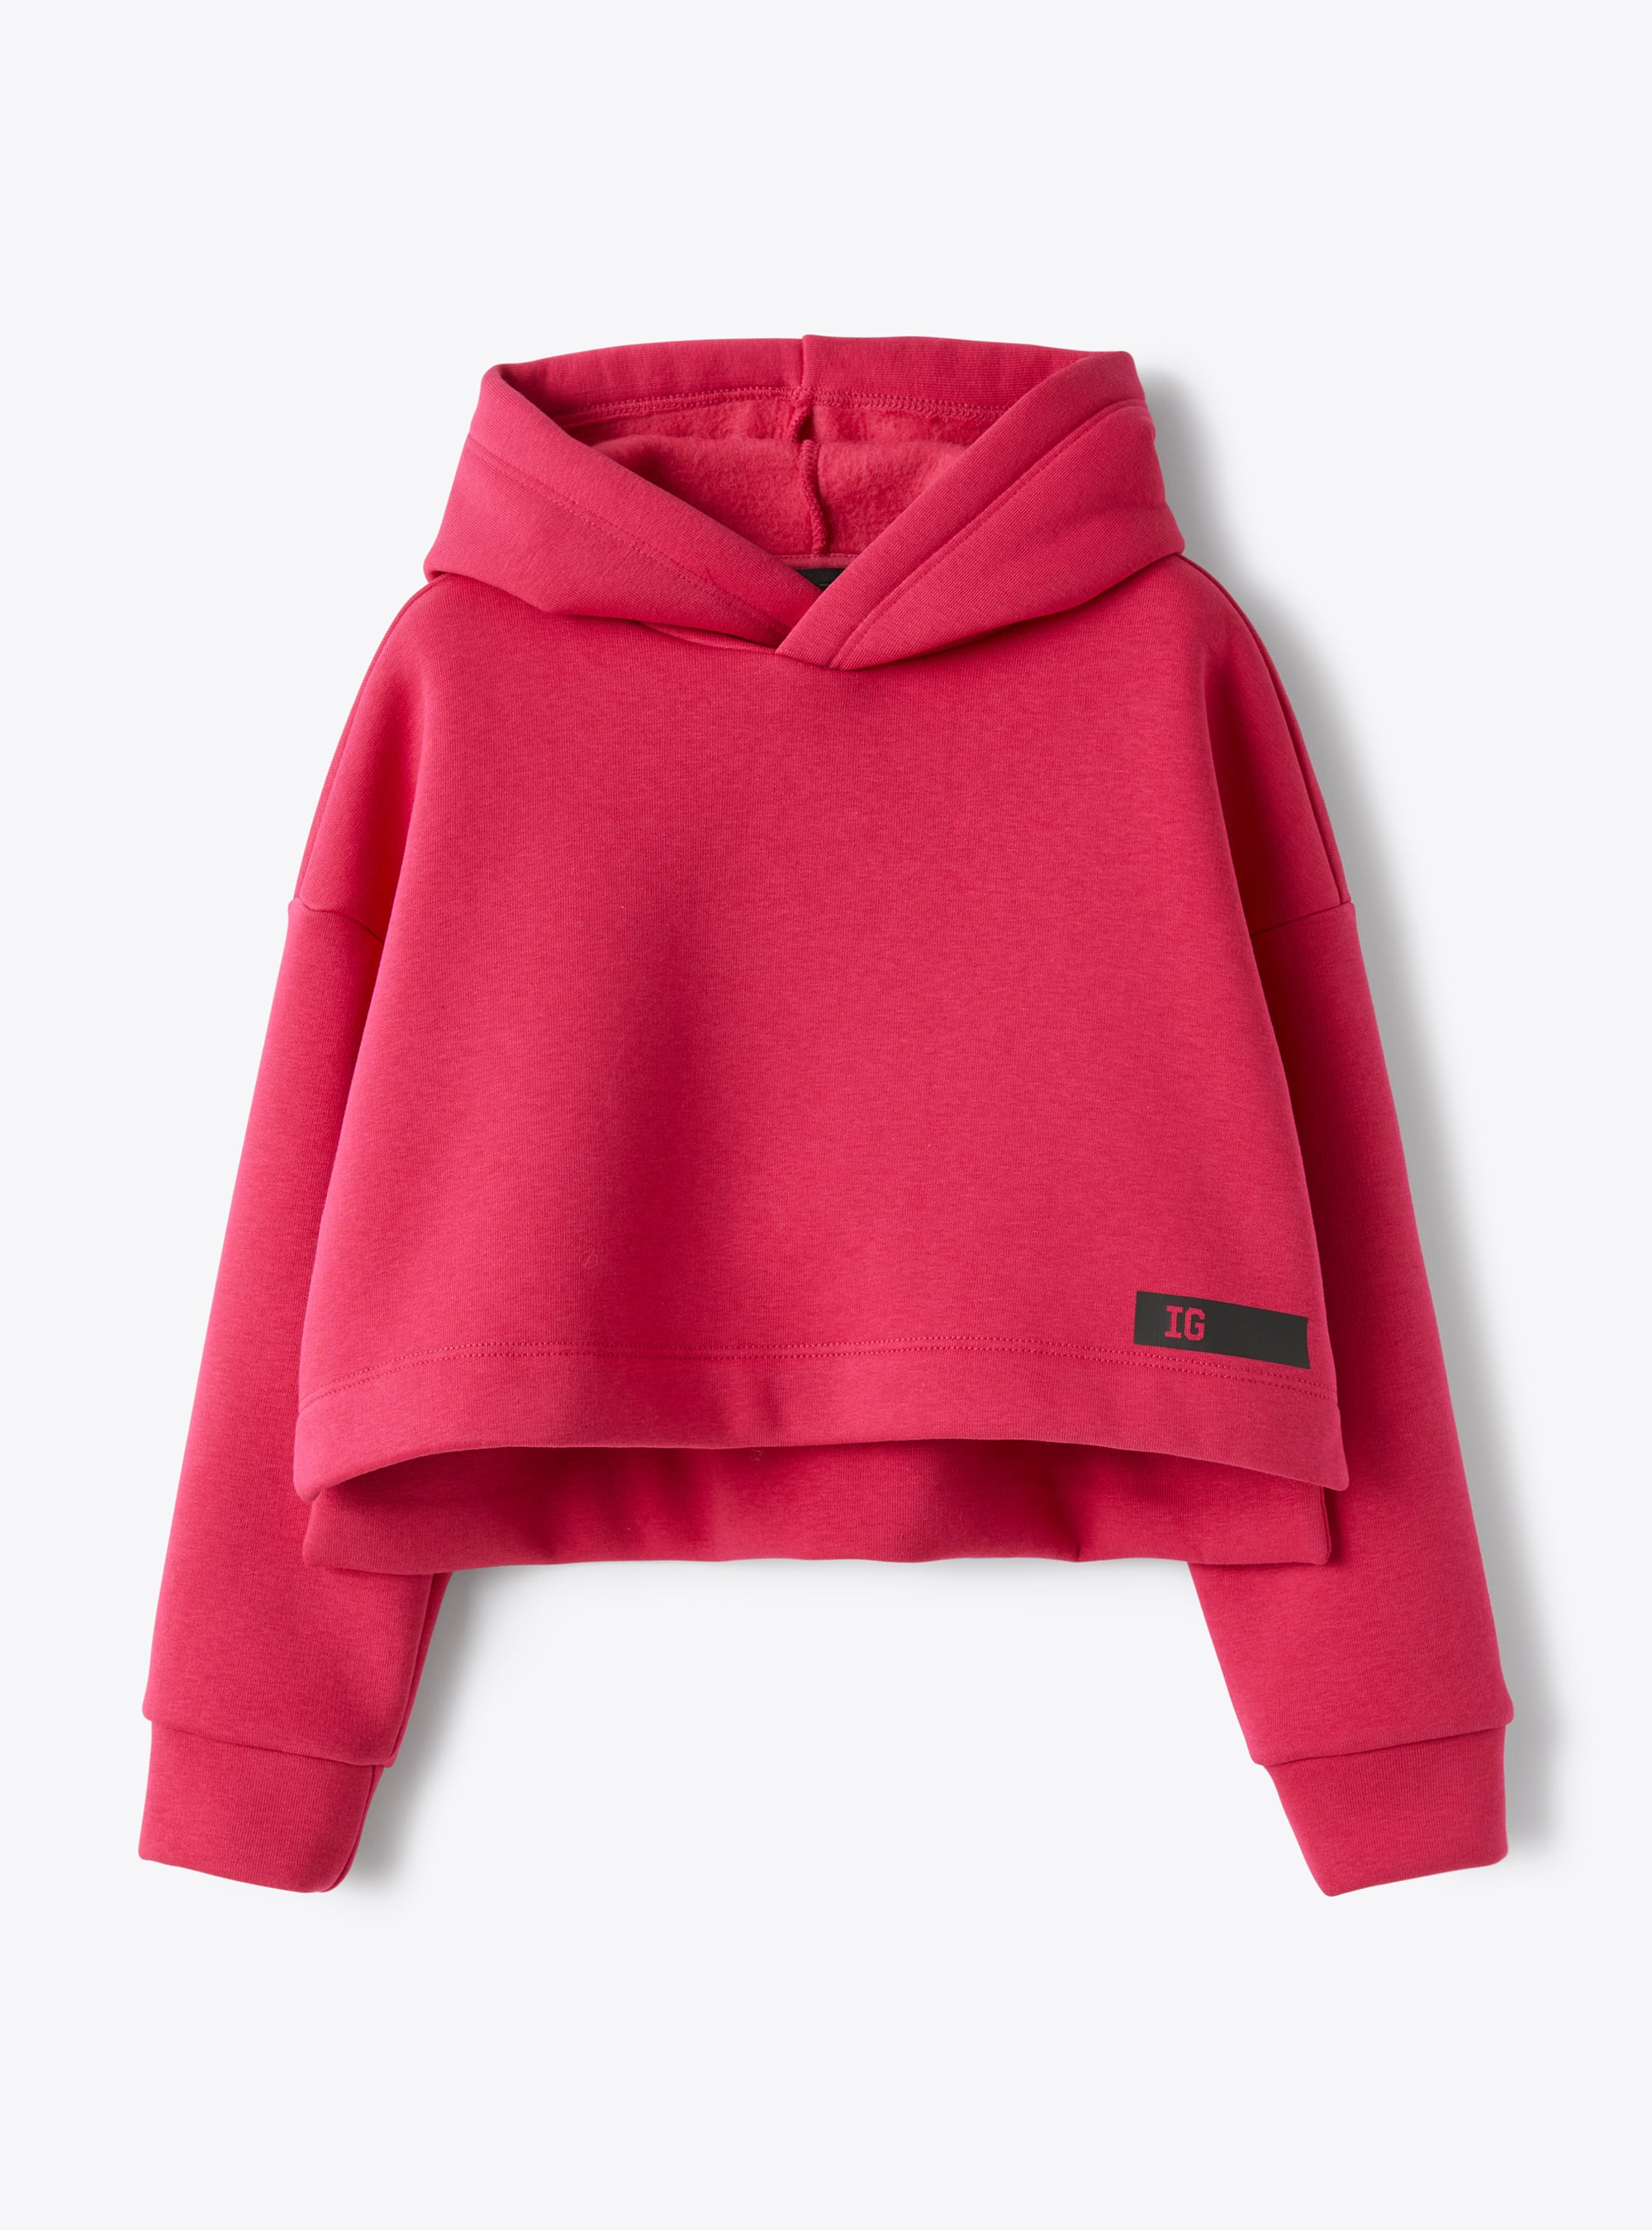 Cropped hooded sweatshirt in fuchsia pink - Sweatshirts - Il Gufo